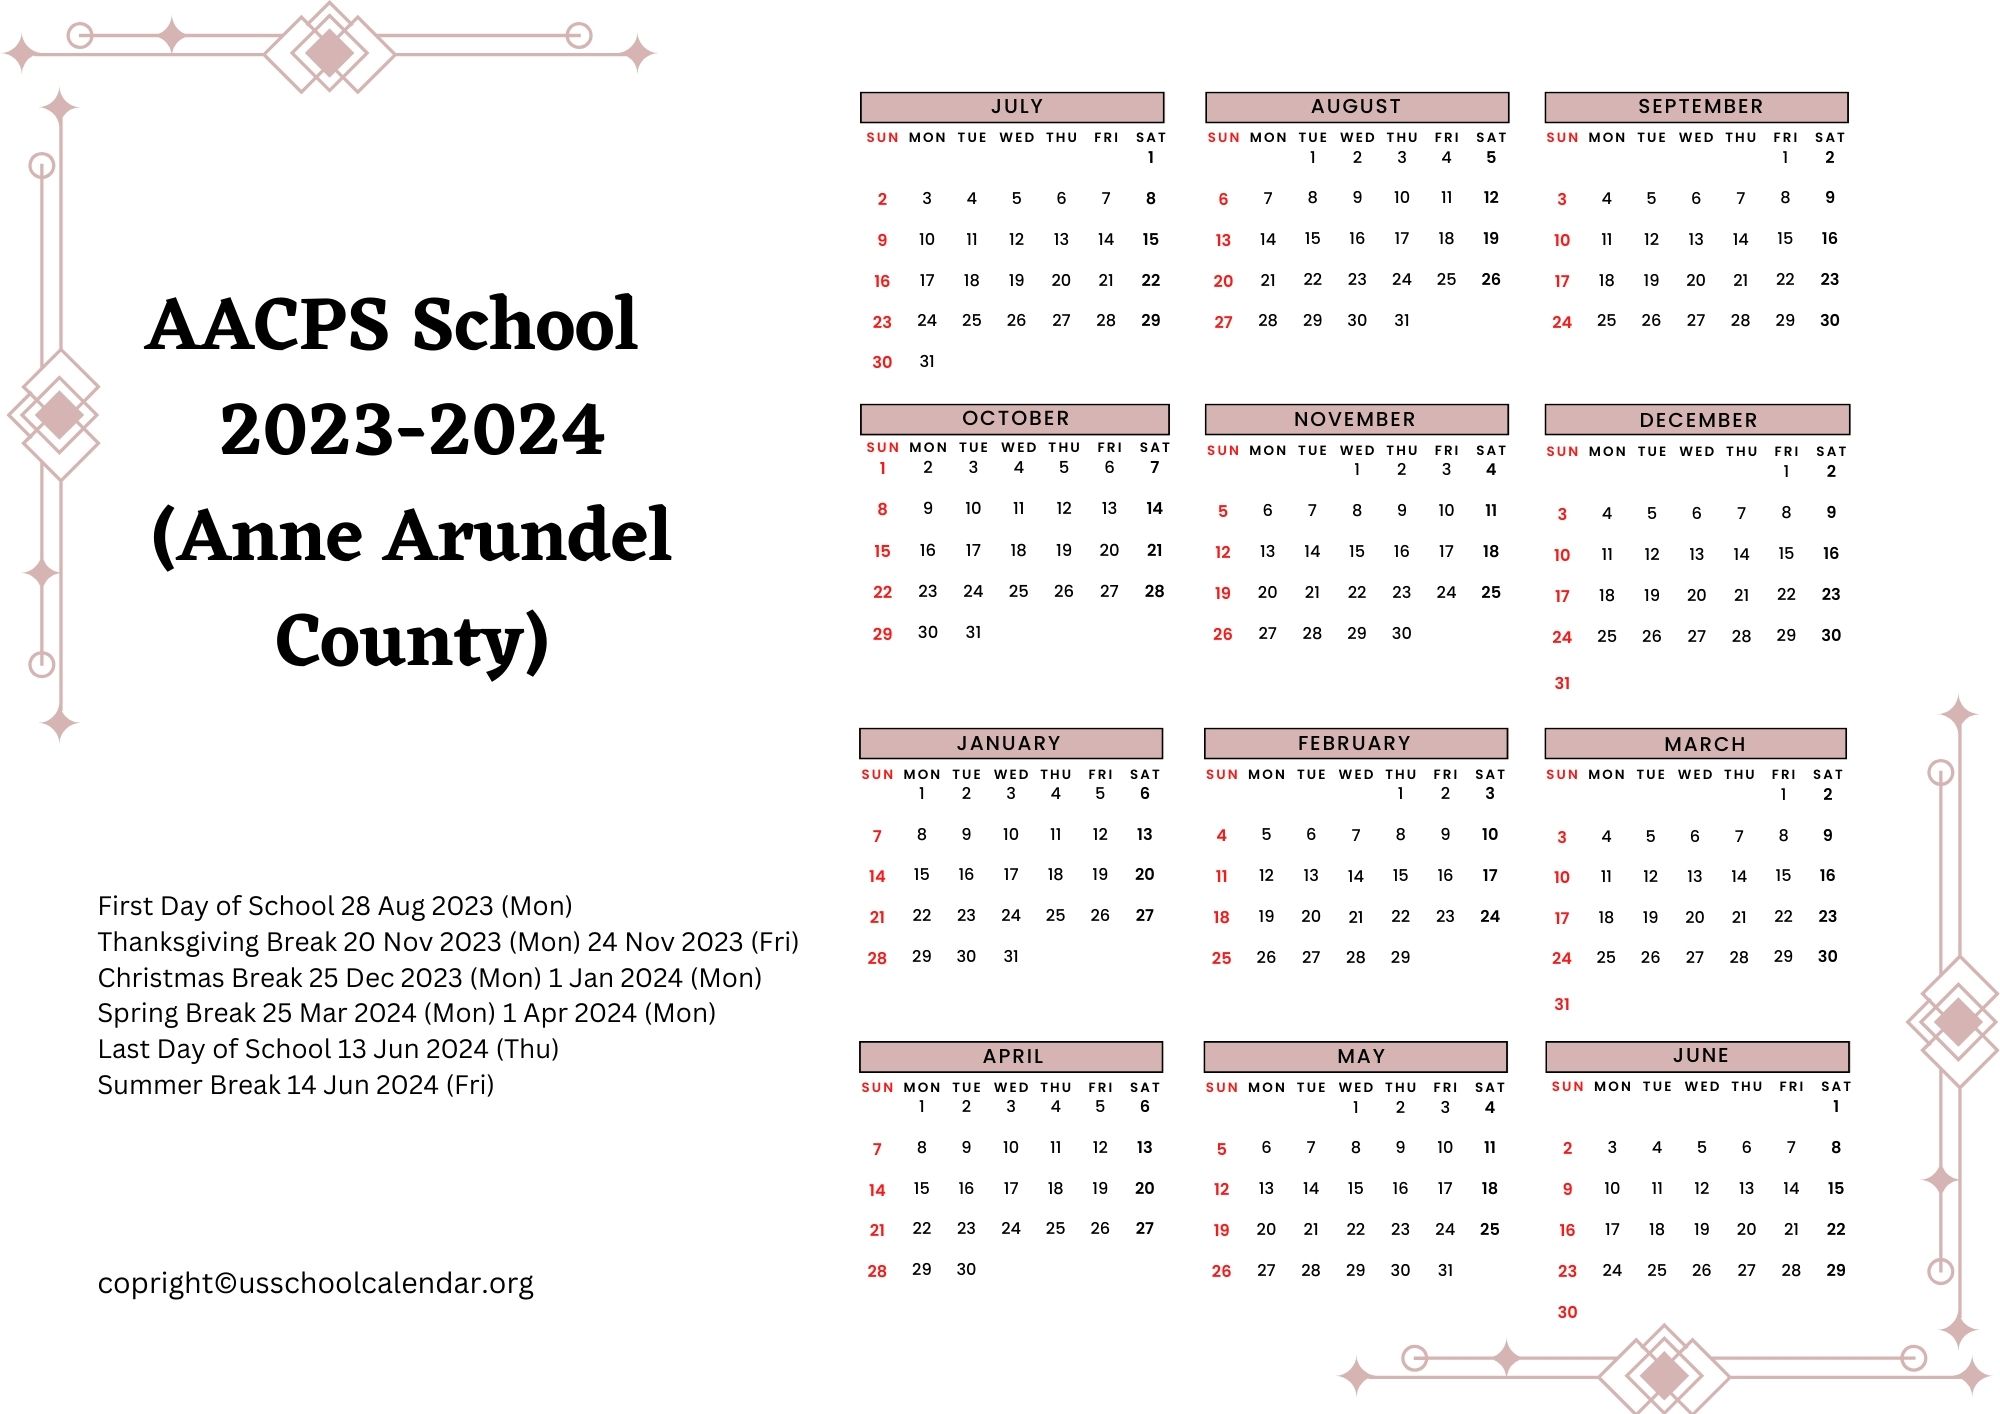 AACPS School Calendar for 20232024 [Anne Arundel County]